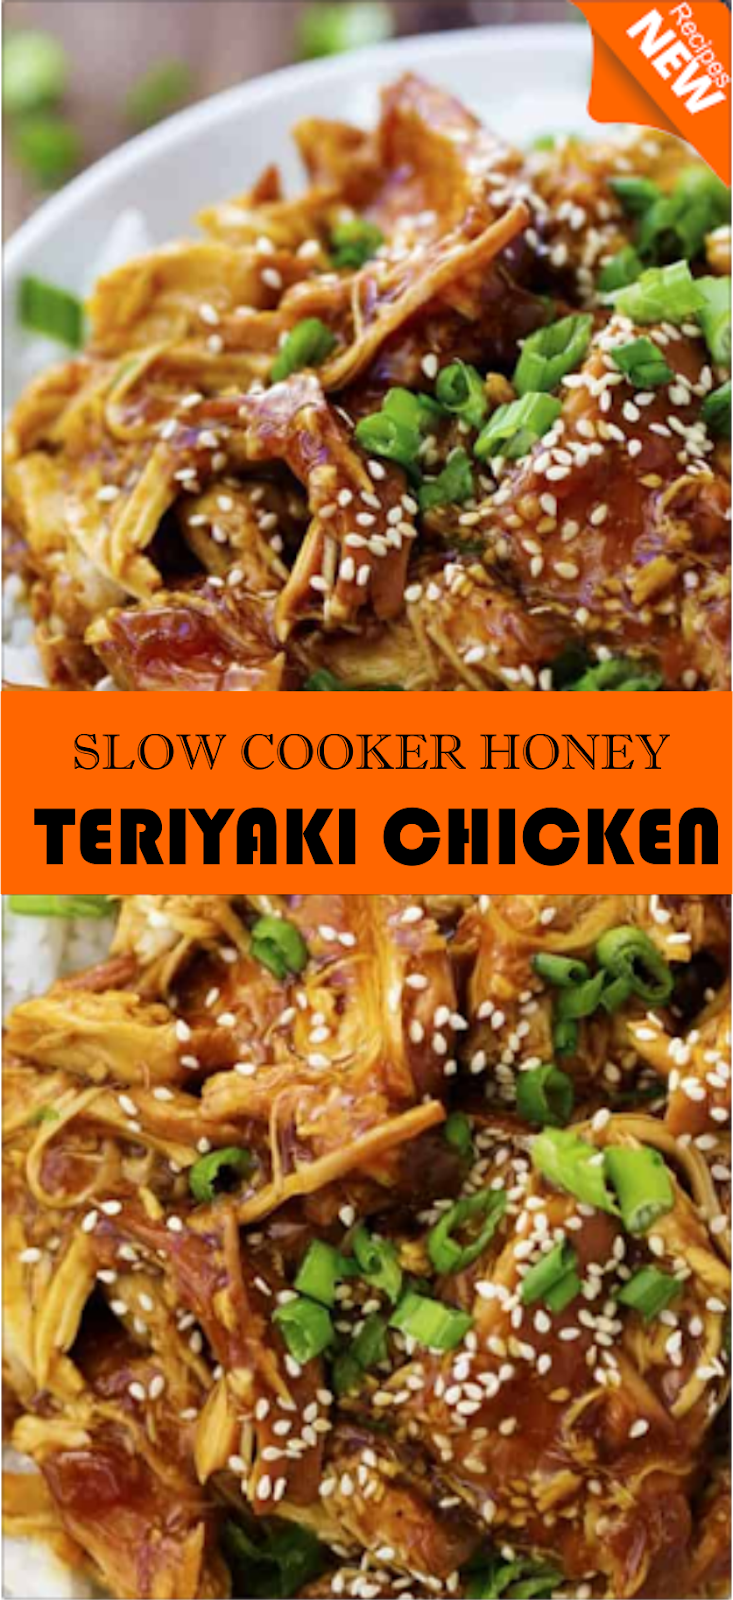 SLOW COOKER HONEY TERIYAKI CHICKEN | Think food